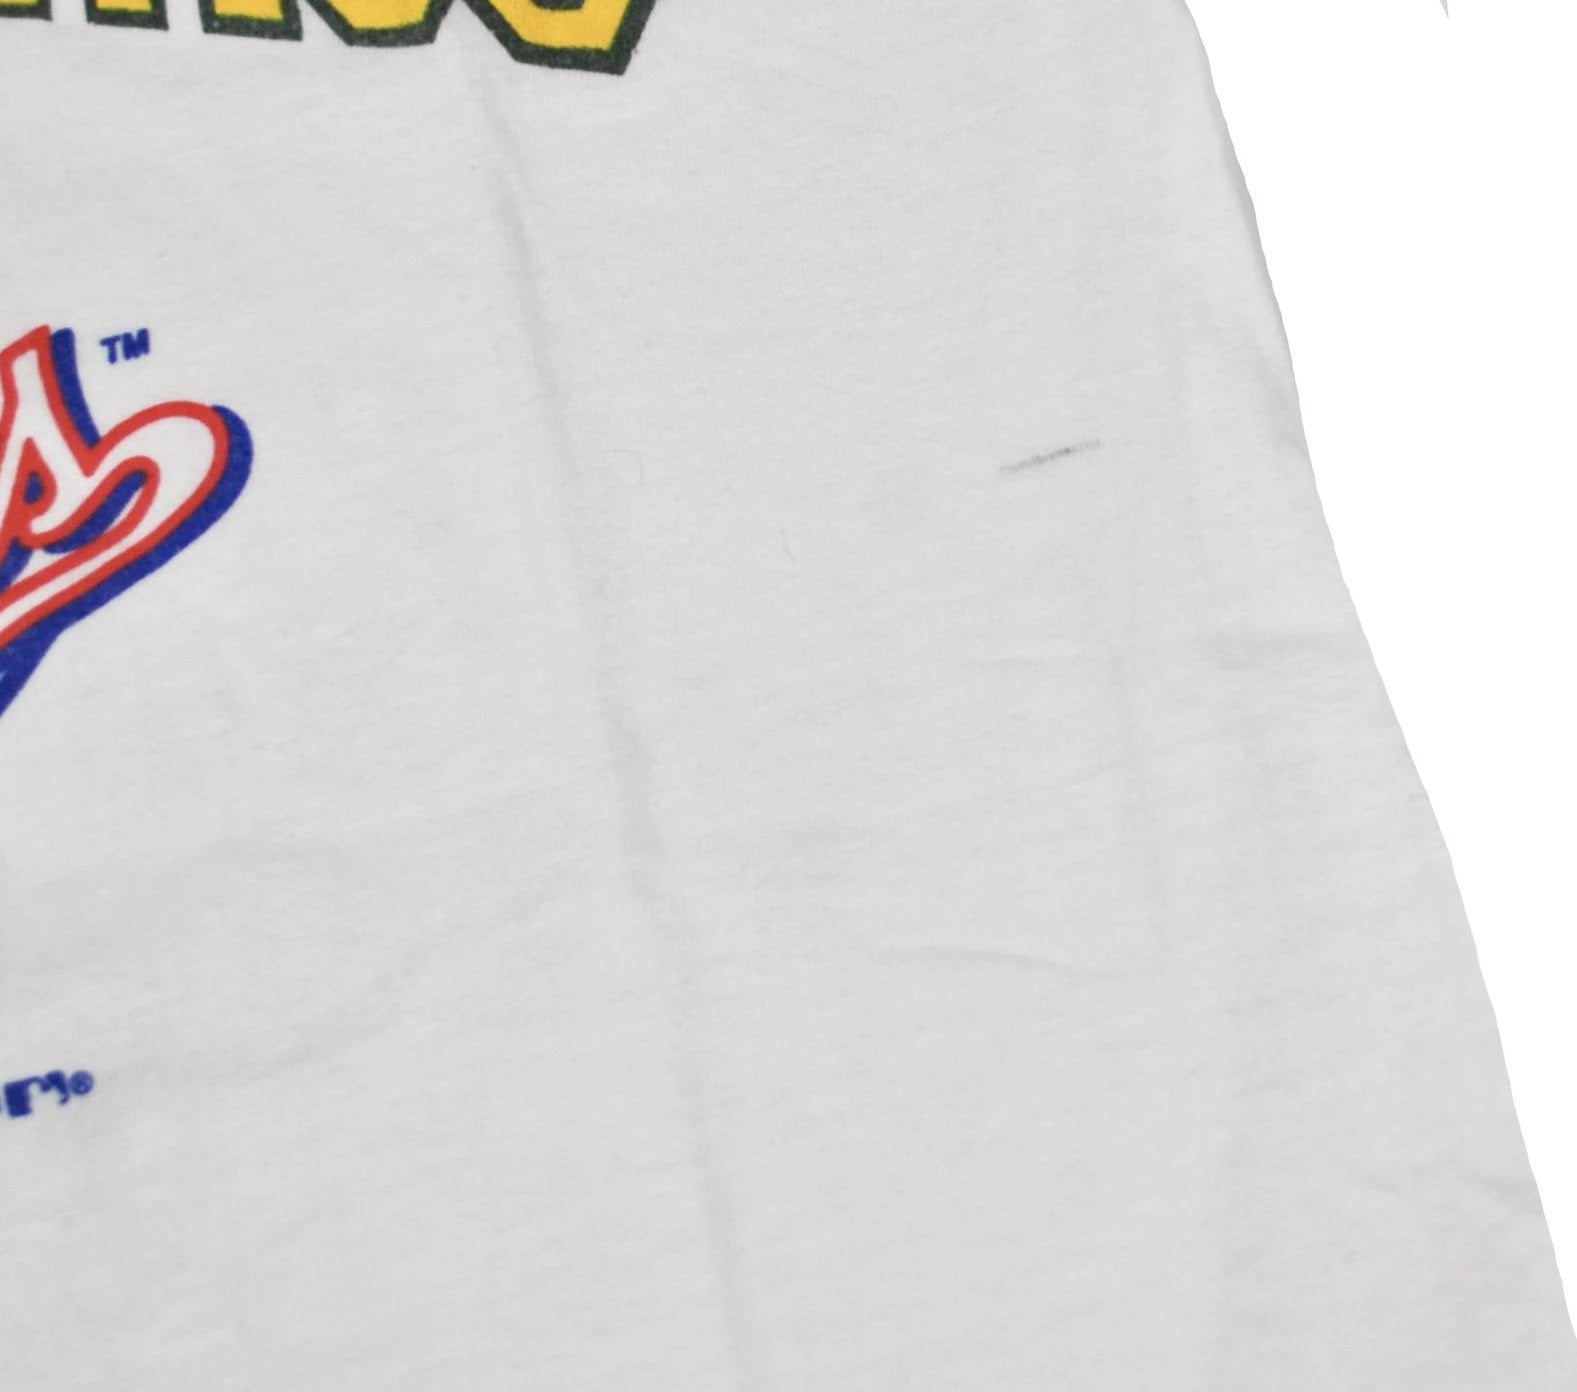 Vintage Starter - Oakland Athletics Single Stitch T-Shirt 1988 Large